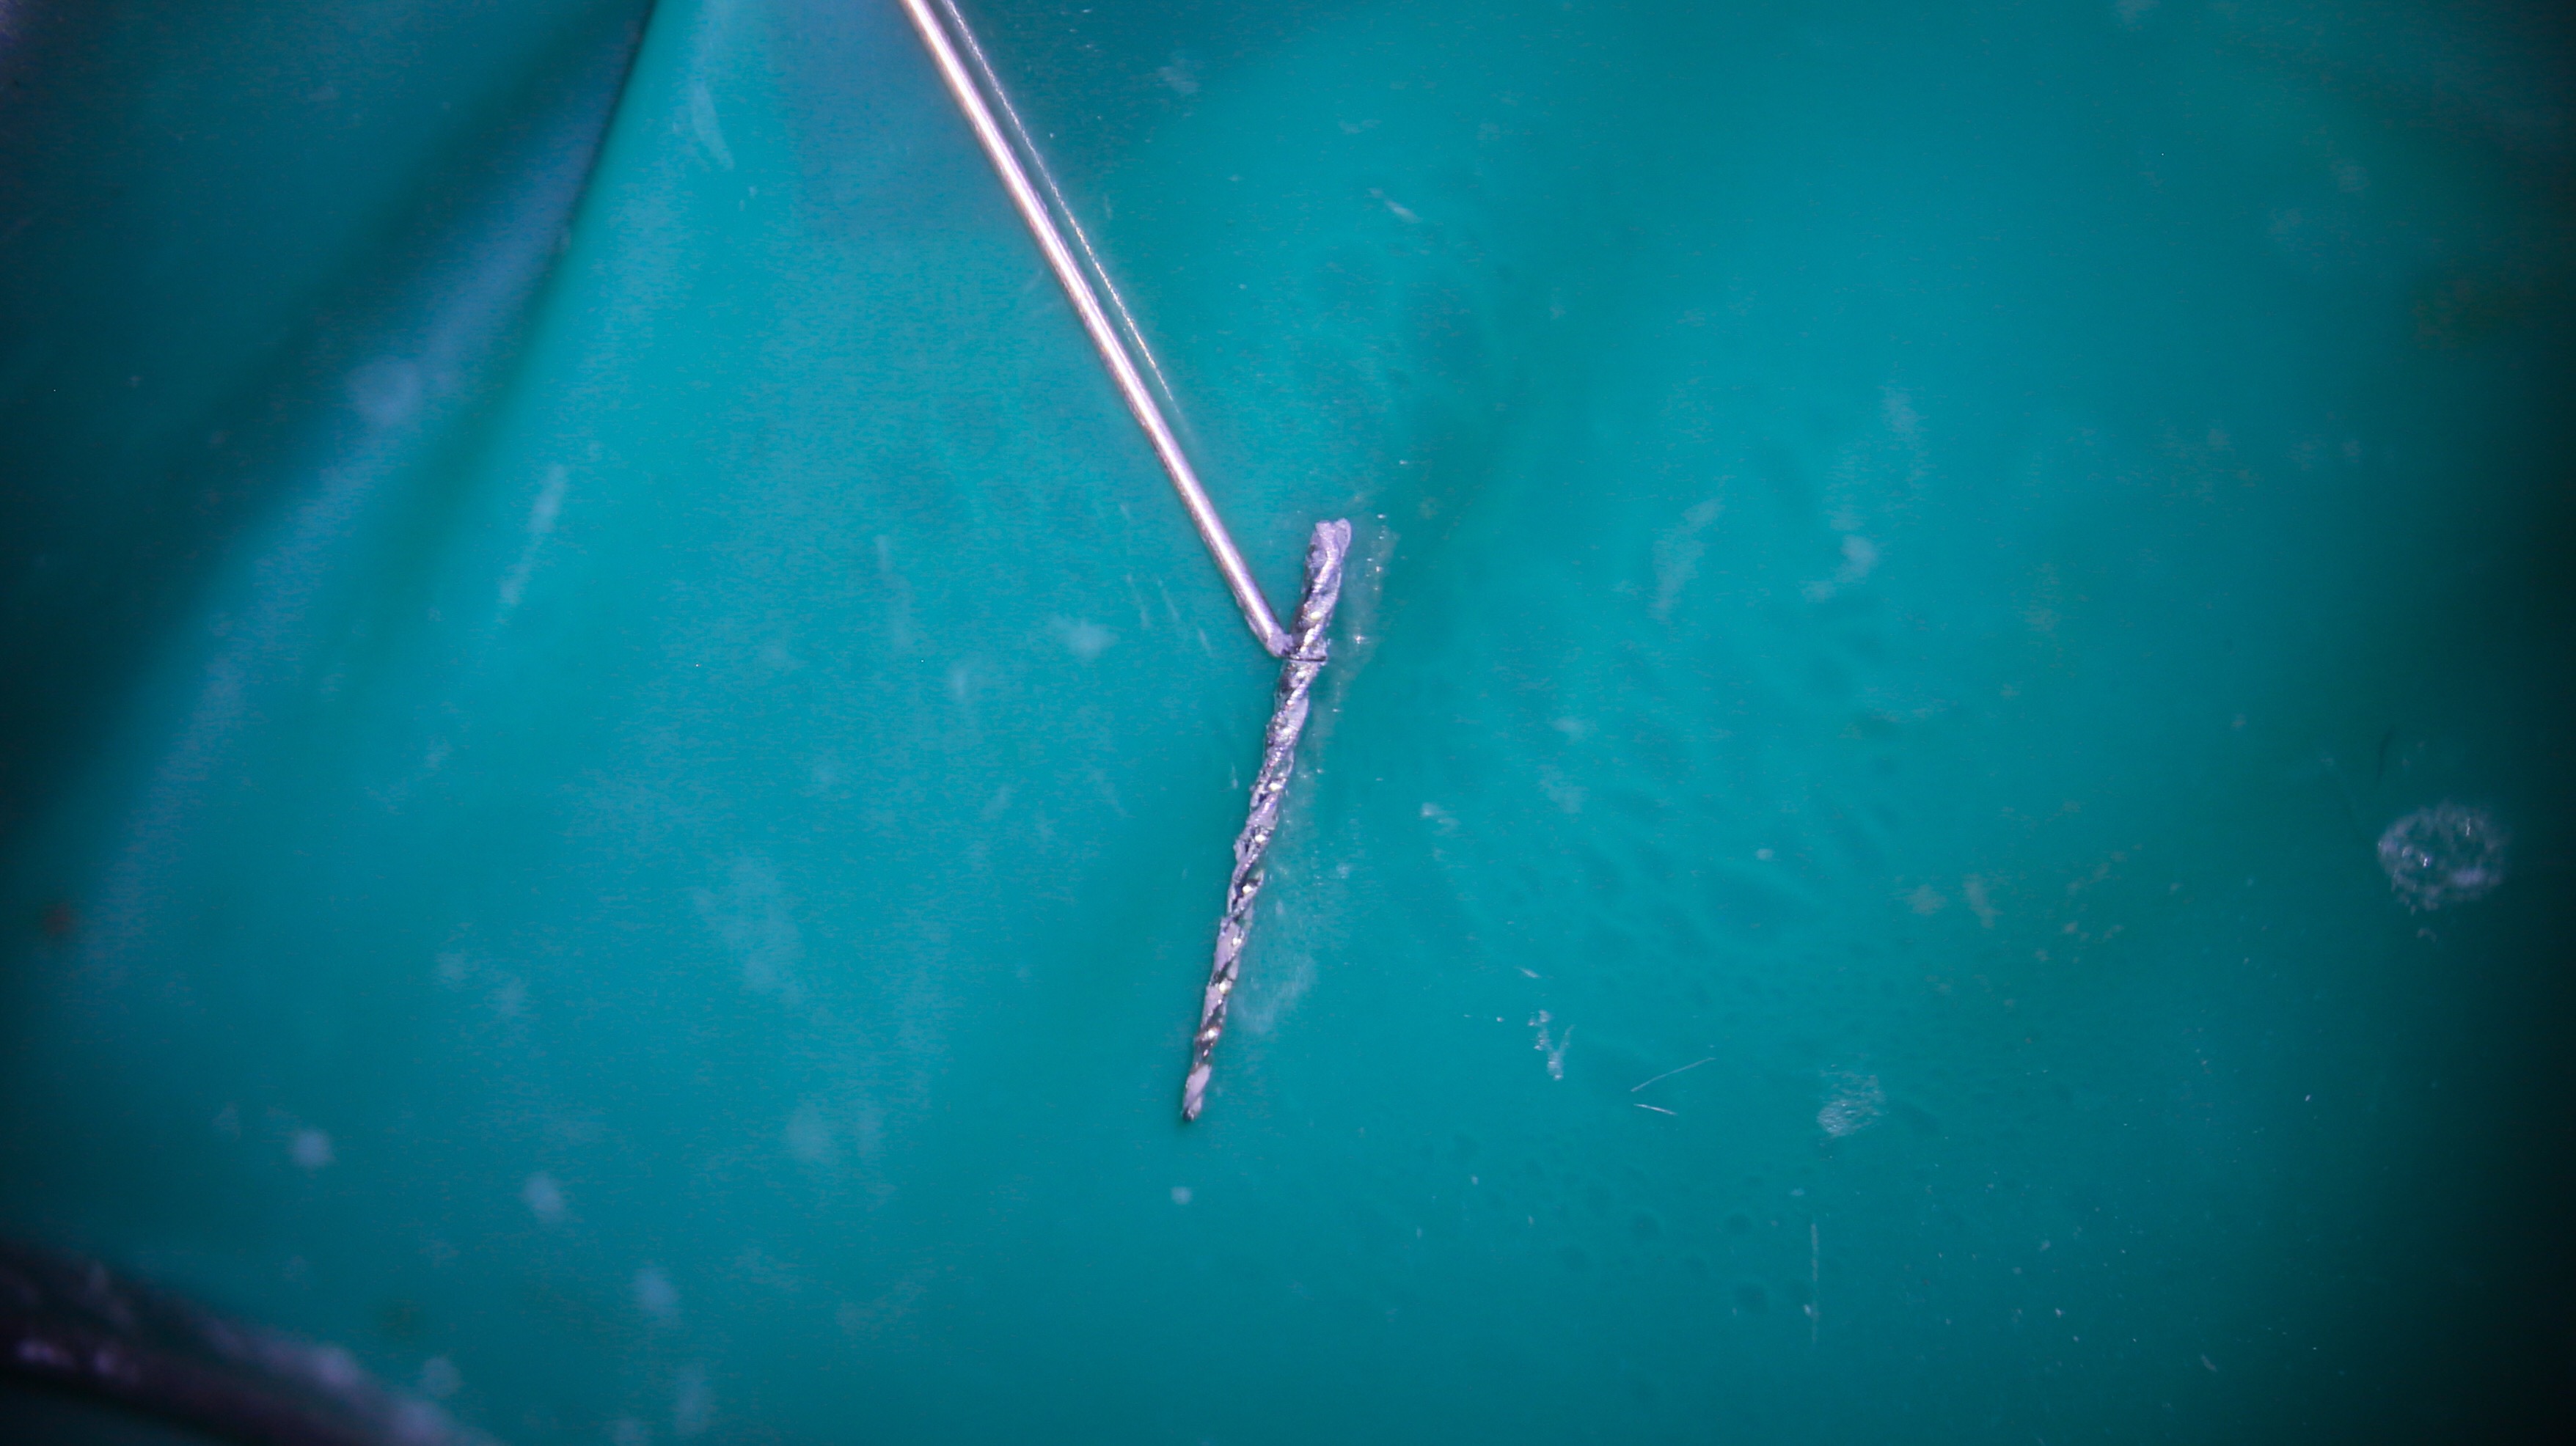 Broken tool case #3 by Dr Jenner Argueta